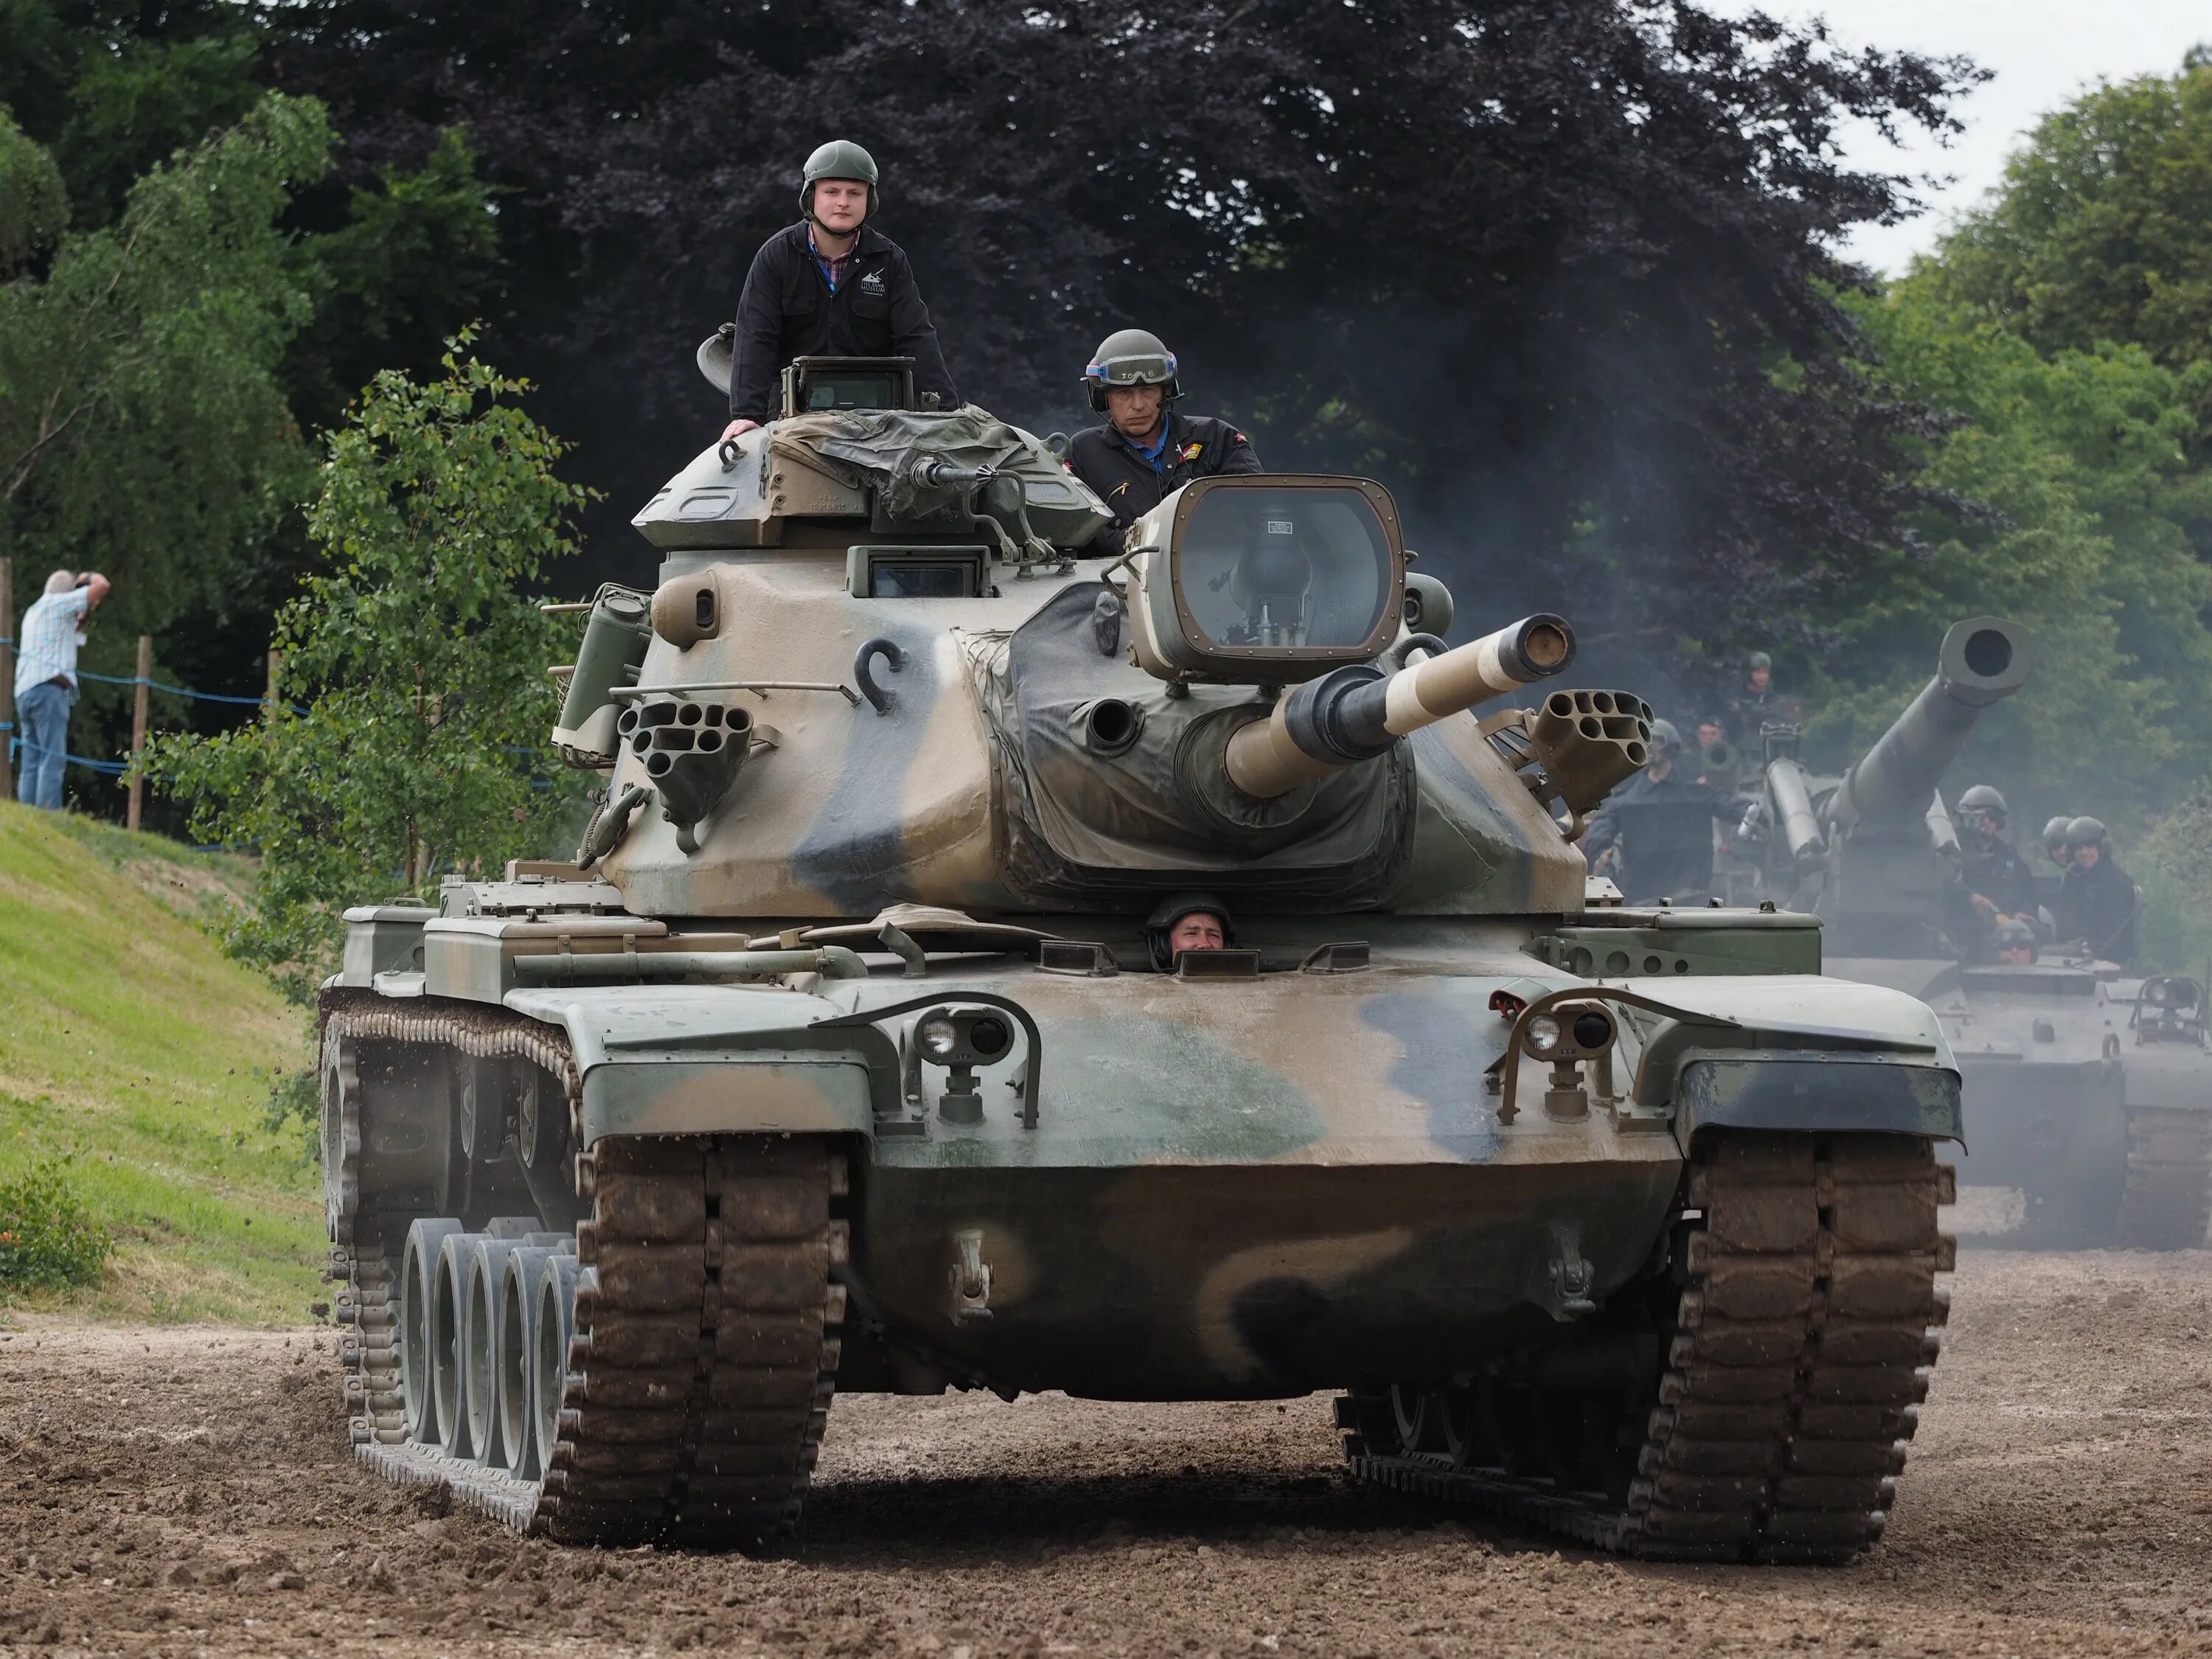 Танковая картинка. M60a1. M60a1 танк. Танк м60а3. Американский танк m60 Patton.